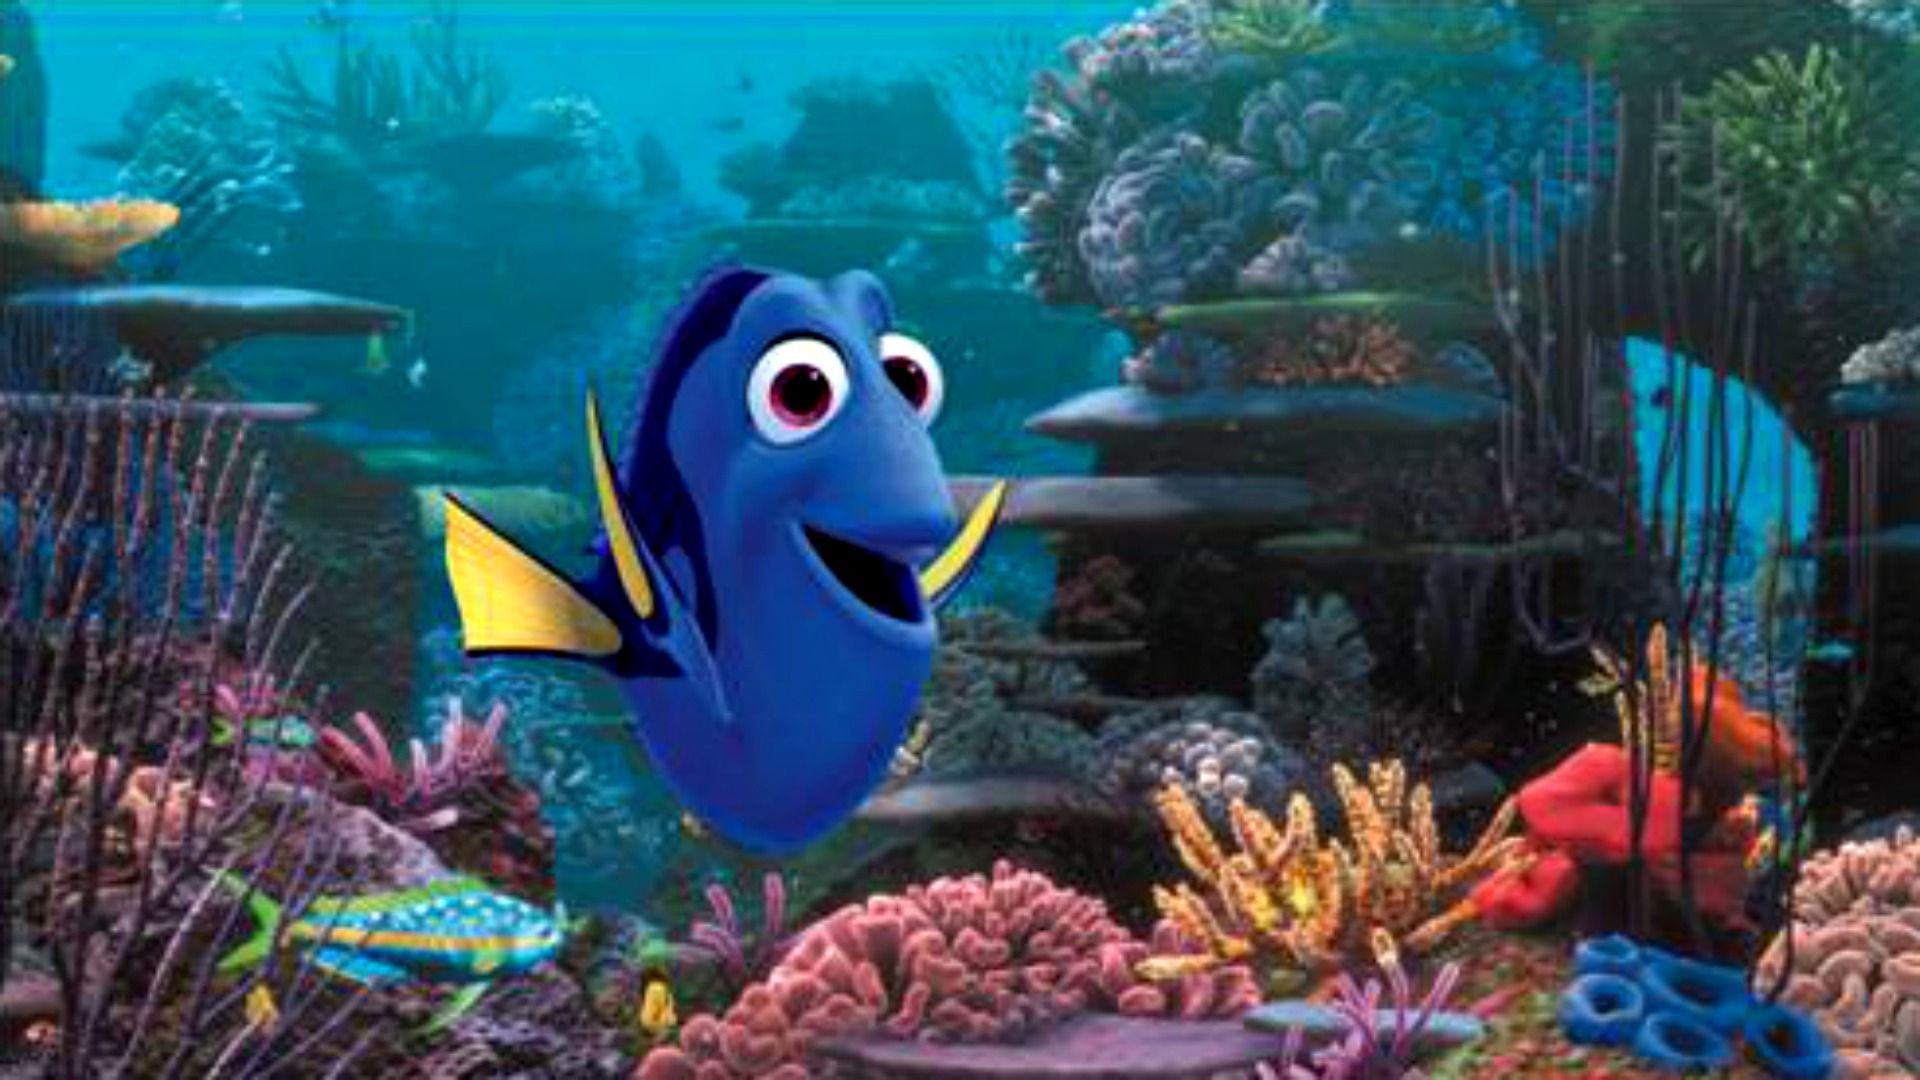 Finding Nemo 3D Dory Wallpaper for Desktop 4028 - HD Wallpapers Site